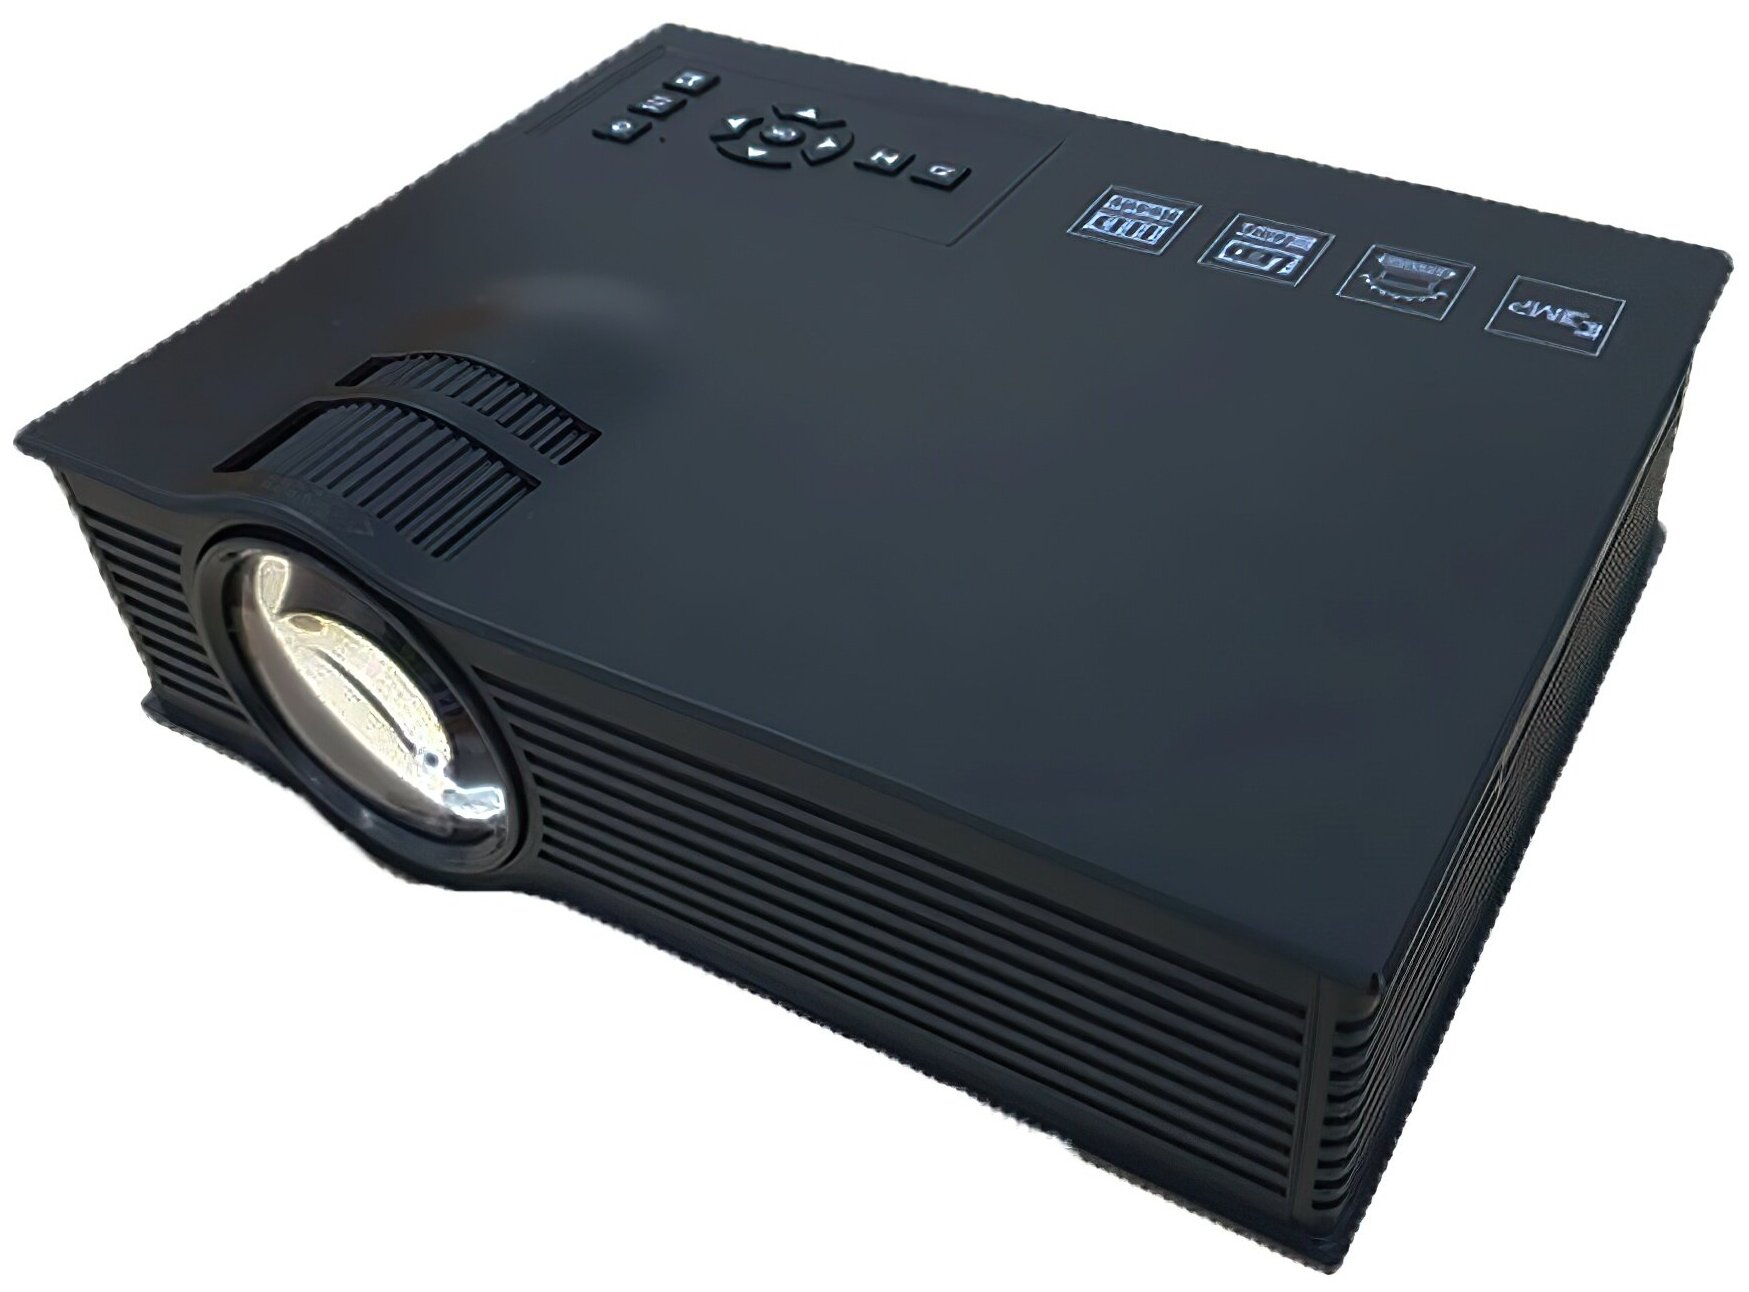 Проектор Unic UC68 черный 800x480 800:1 1800 лм LCD 09 кг